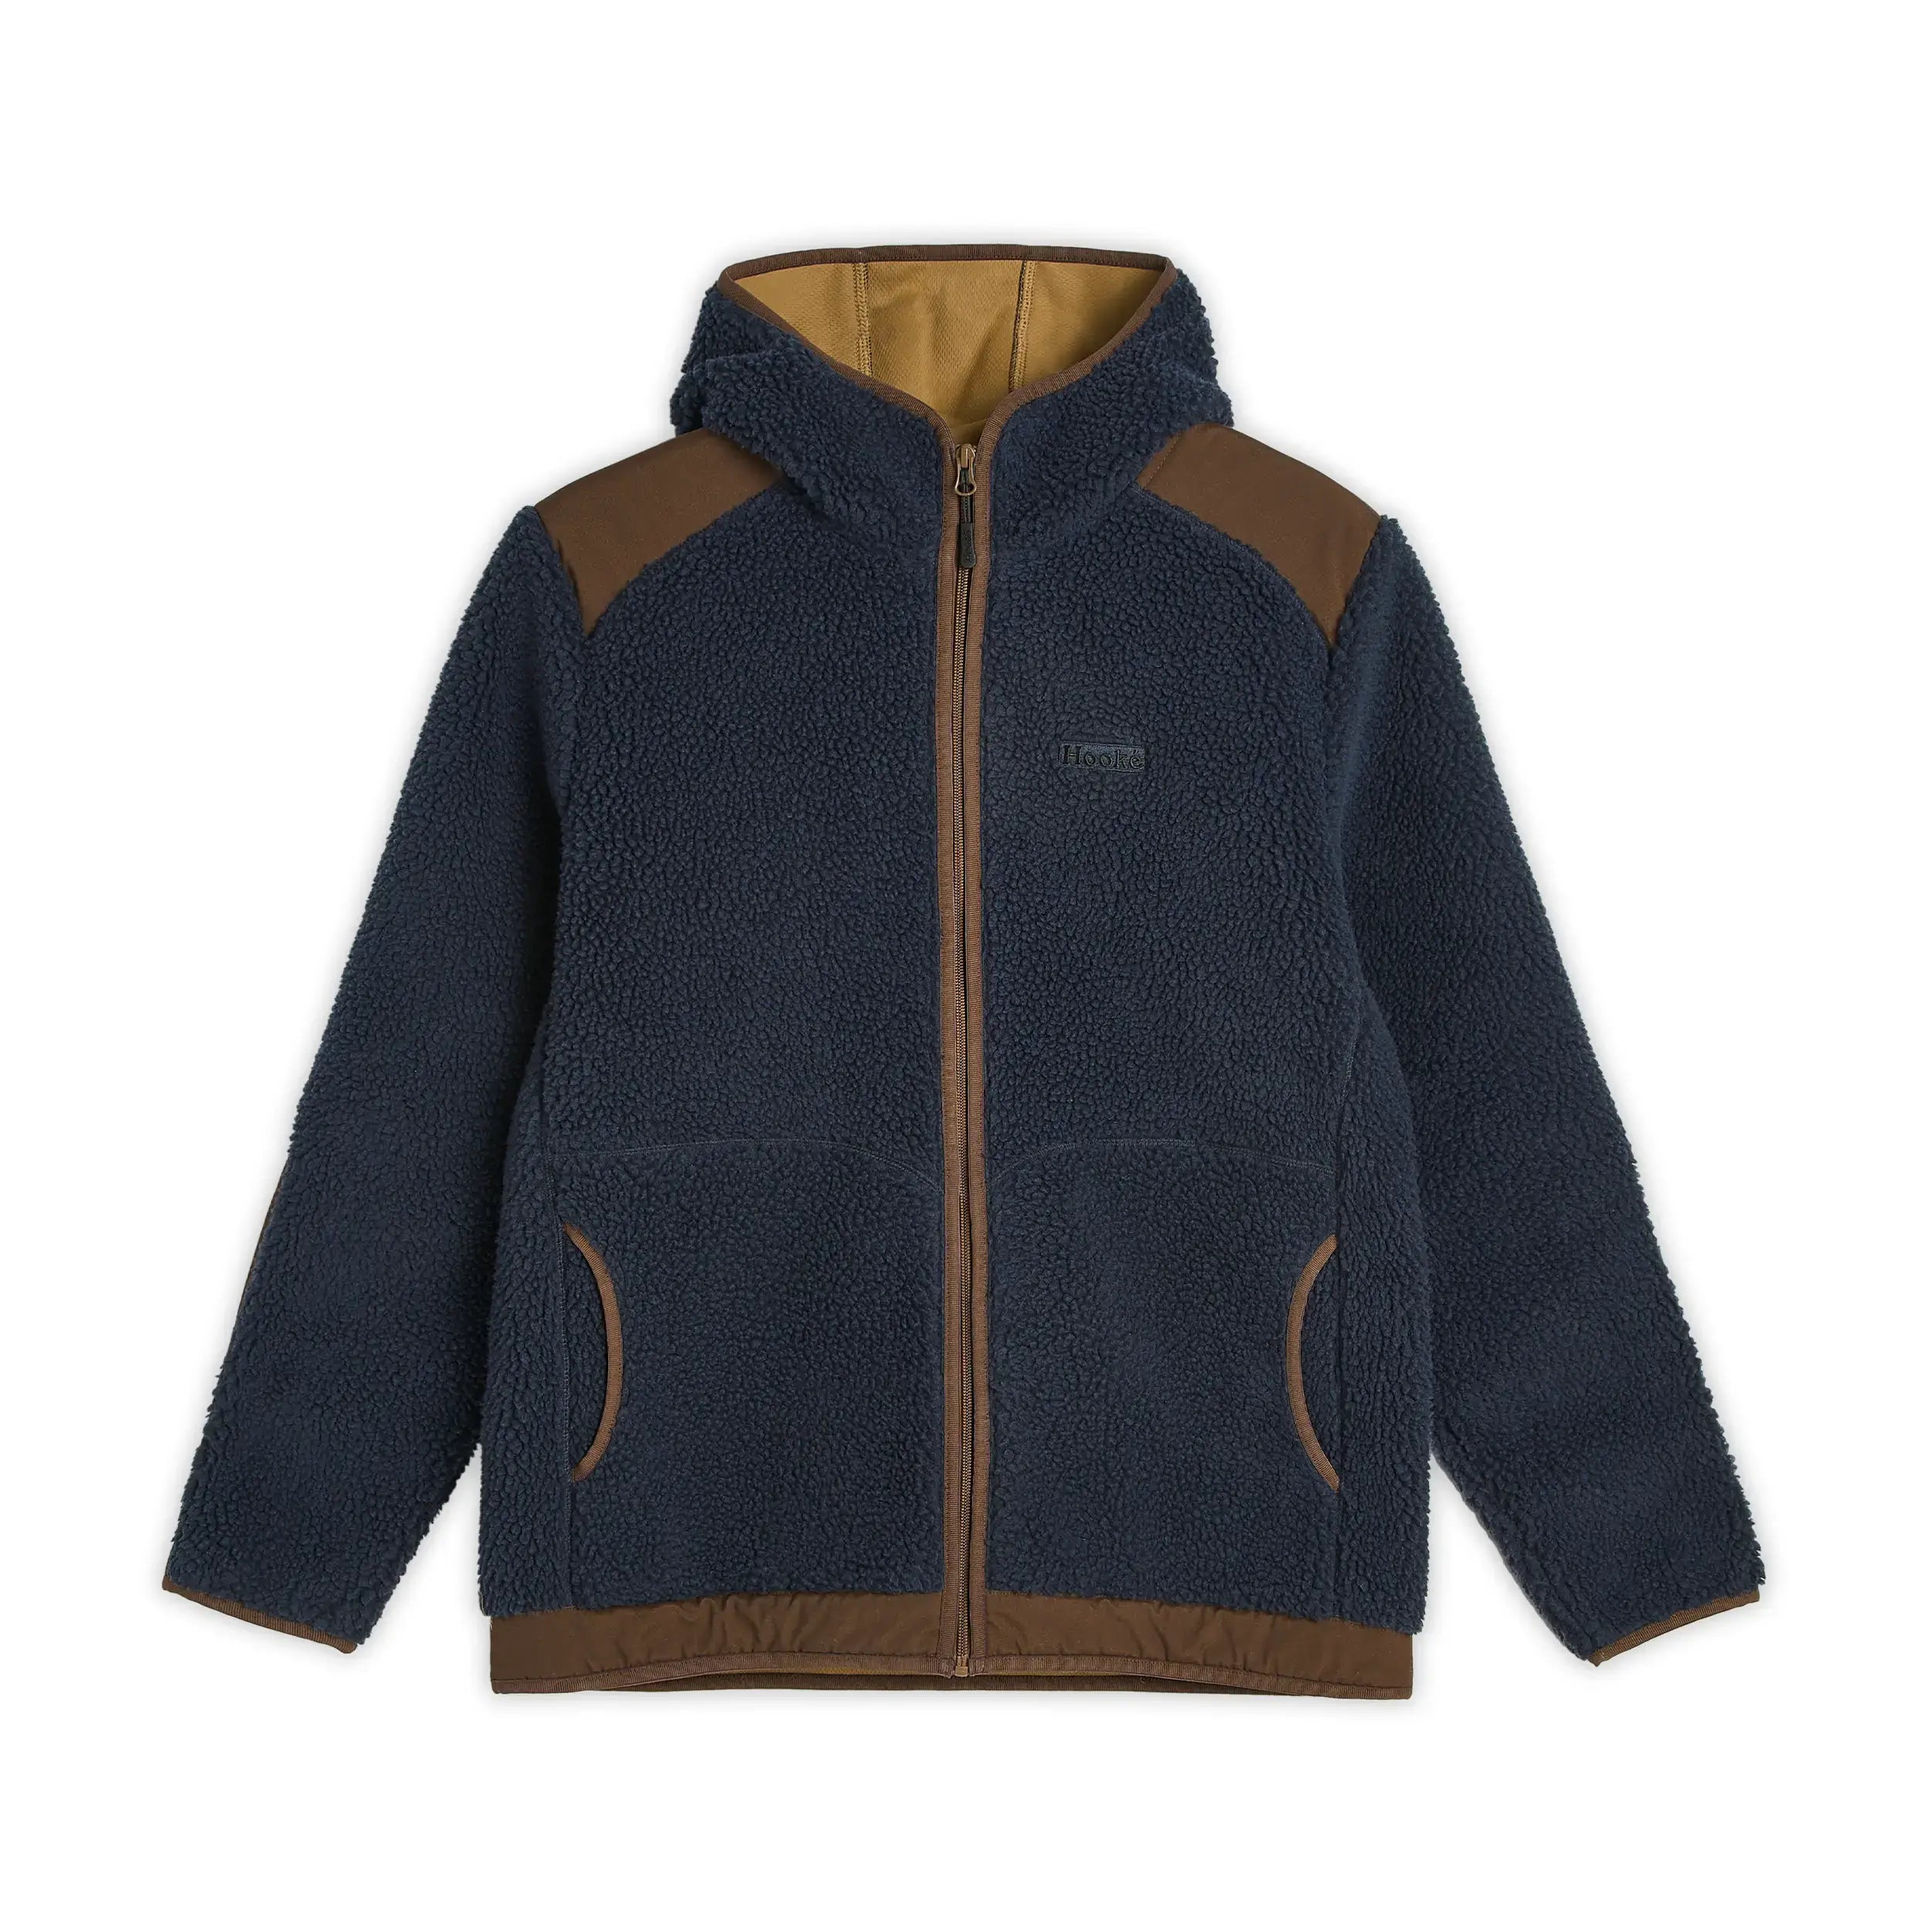 Sherpa zip-up hooded cardigan, Hooké